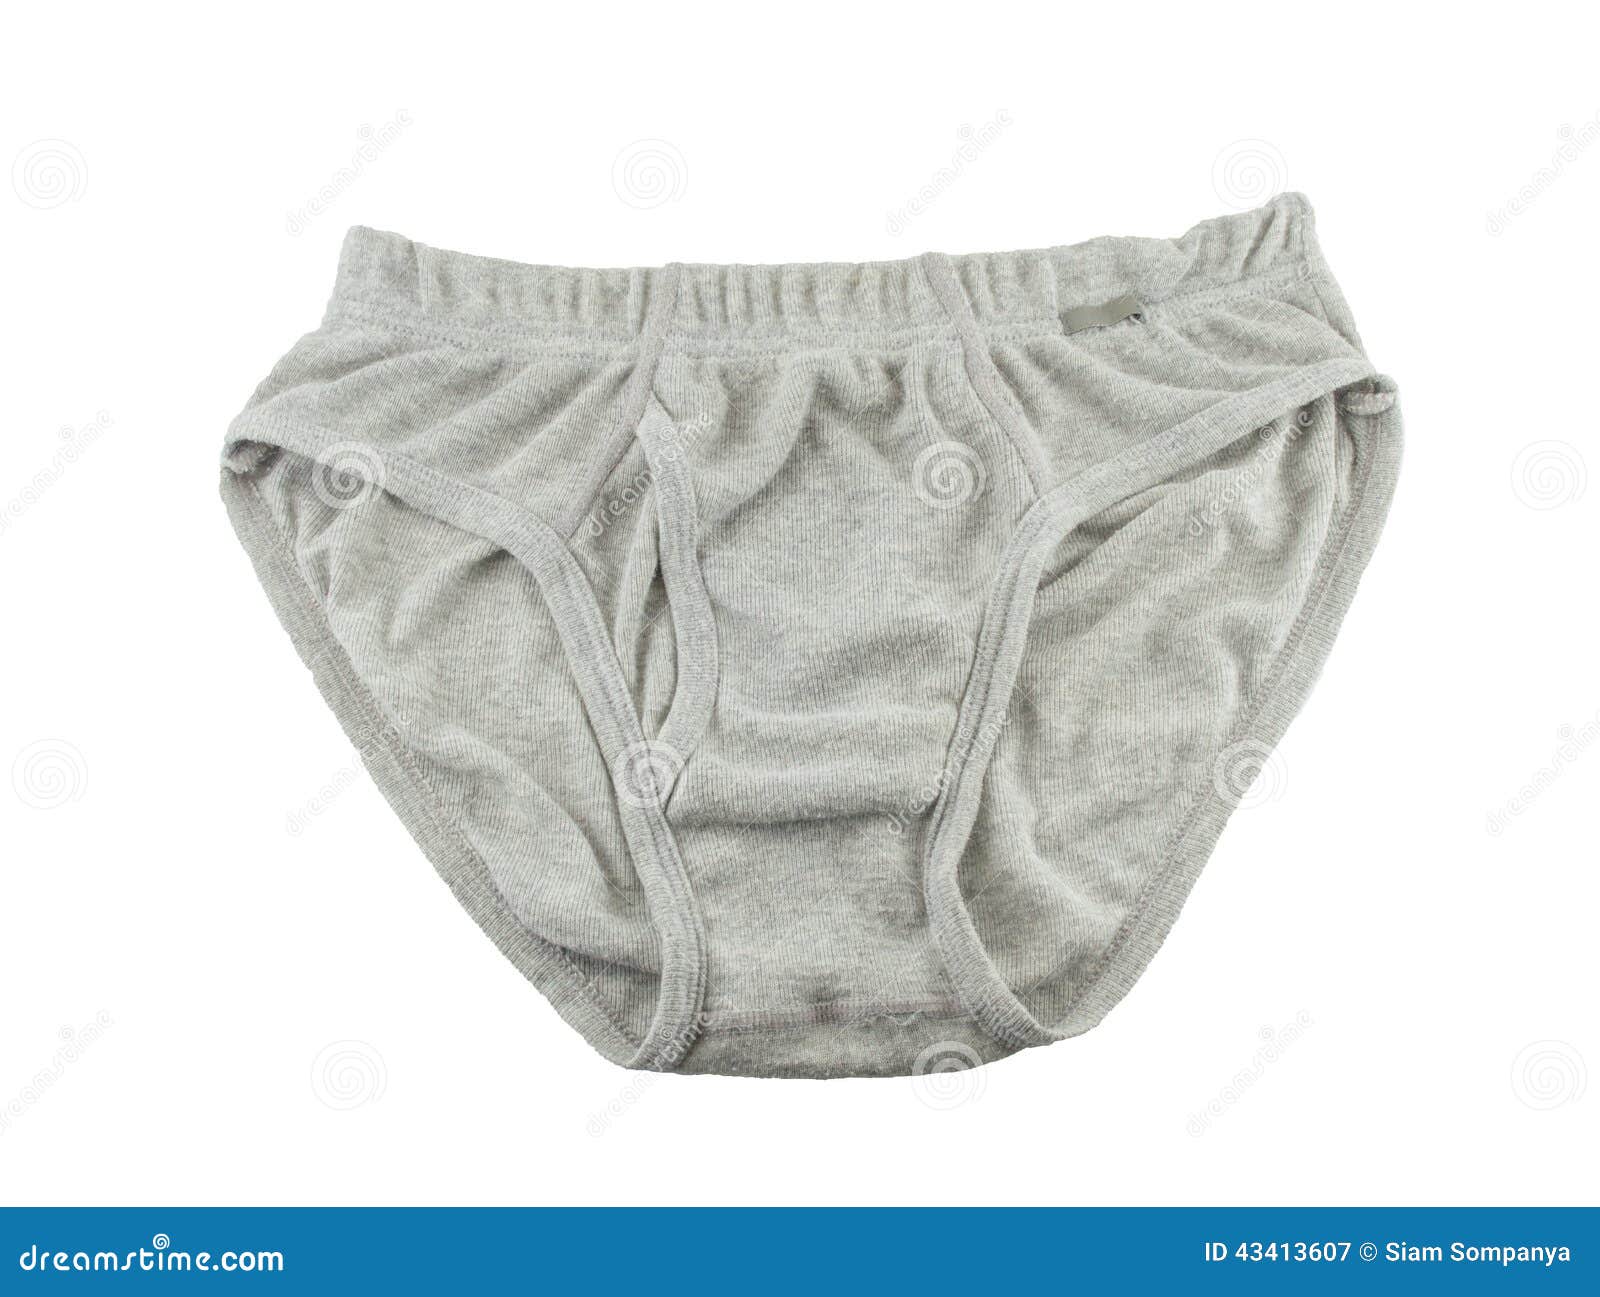 Underwear White Background Stock Photo - Image: 43413607